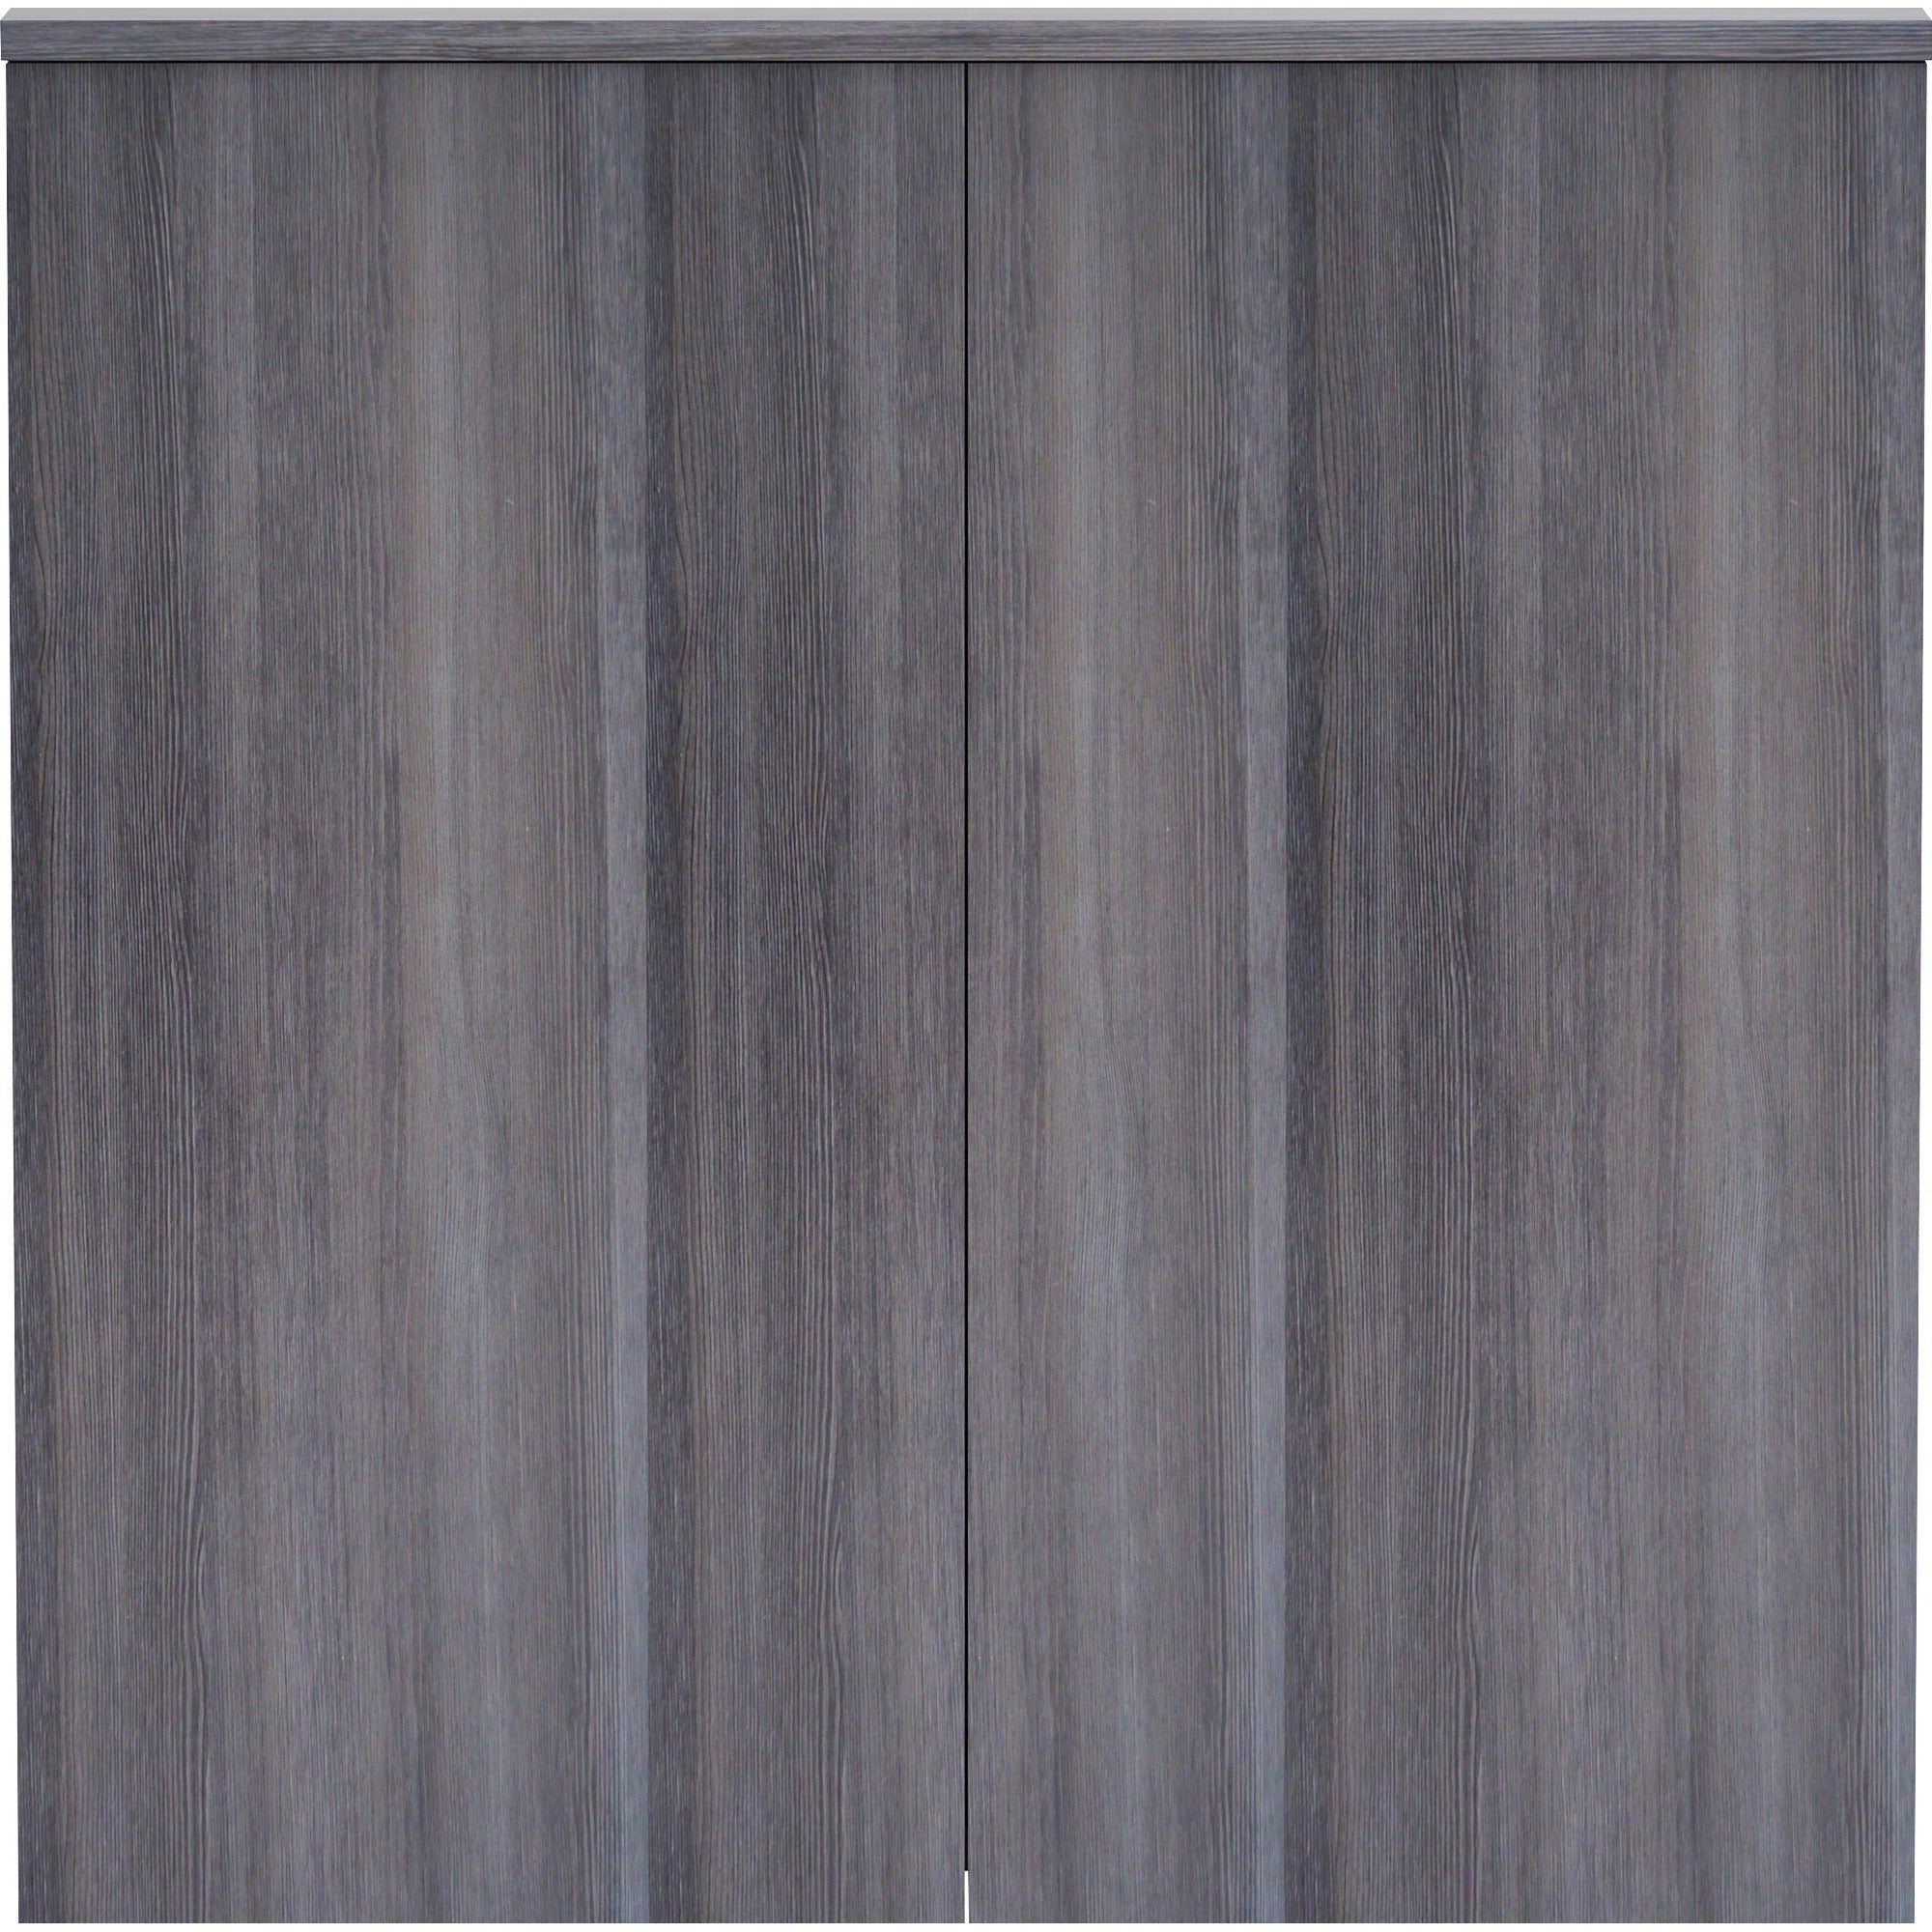 lorell-dry-erase-whiteboard-presentation-cabinet-hinged-door-dry-erase-surface-1-each-473-x-473-x-48_llr69625 - 2